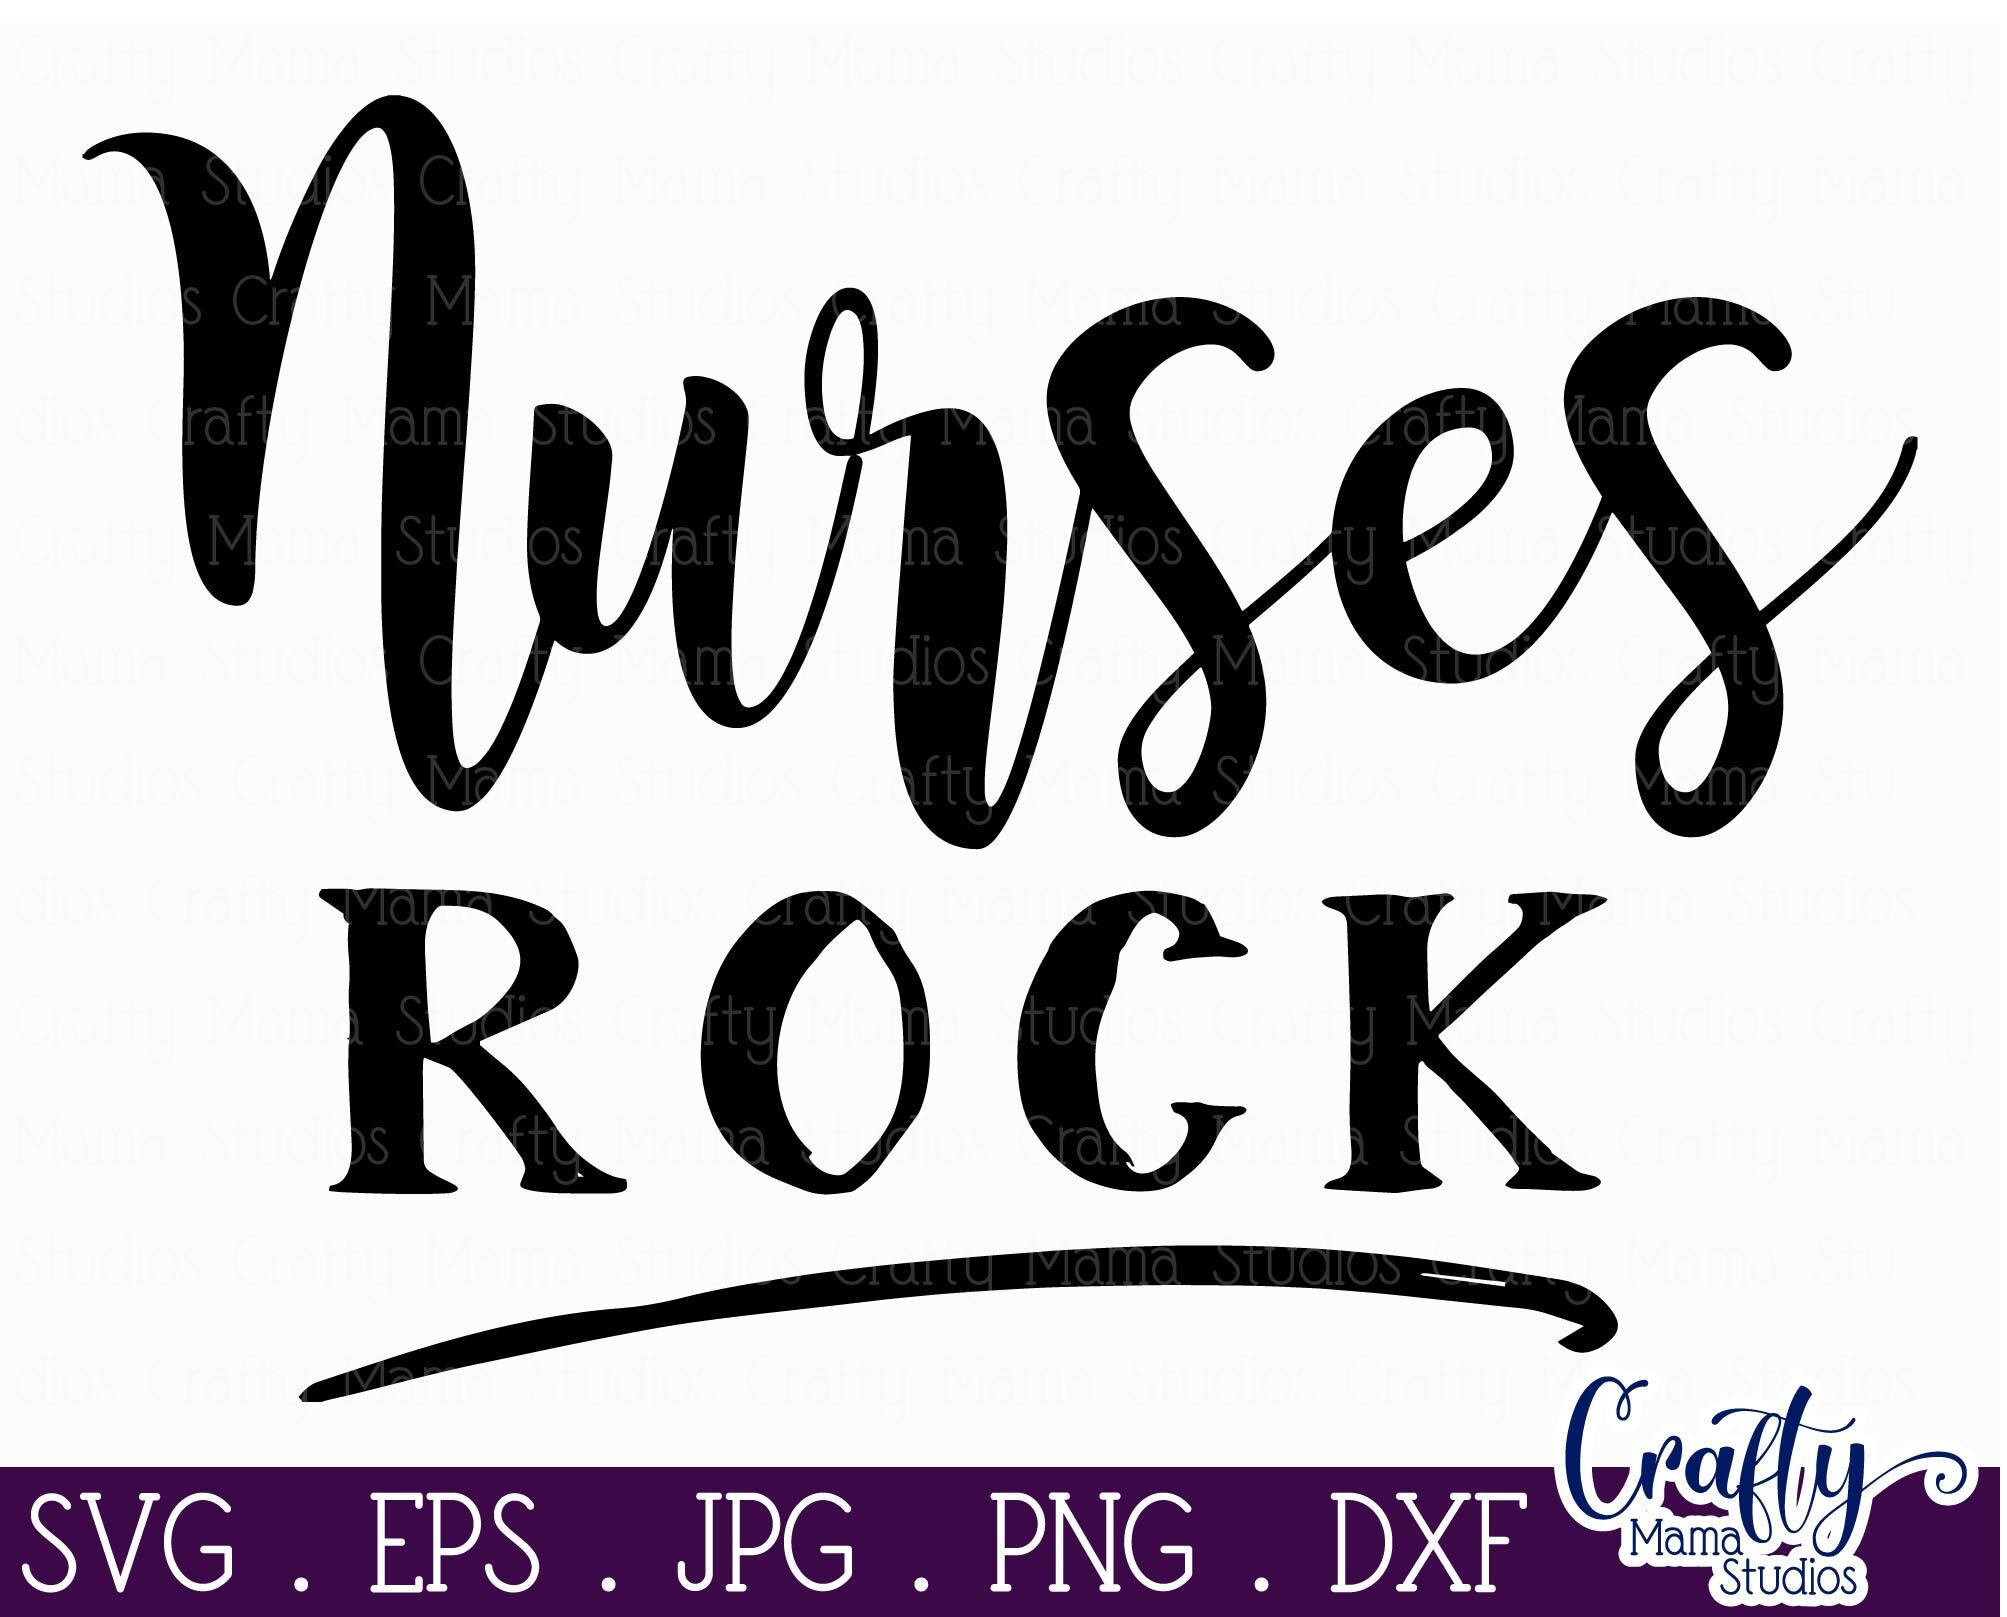 Download Nurses Rock Svg Nursing Svg Love Svg By Crafty Mama Studios Thehungryjpeg Com